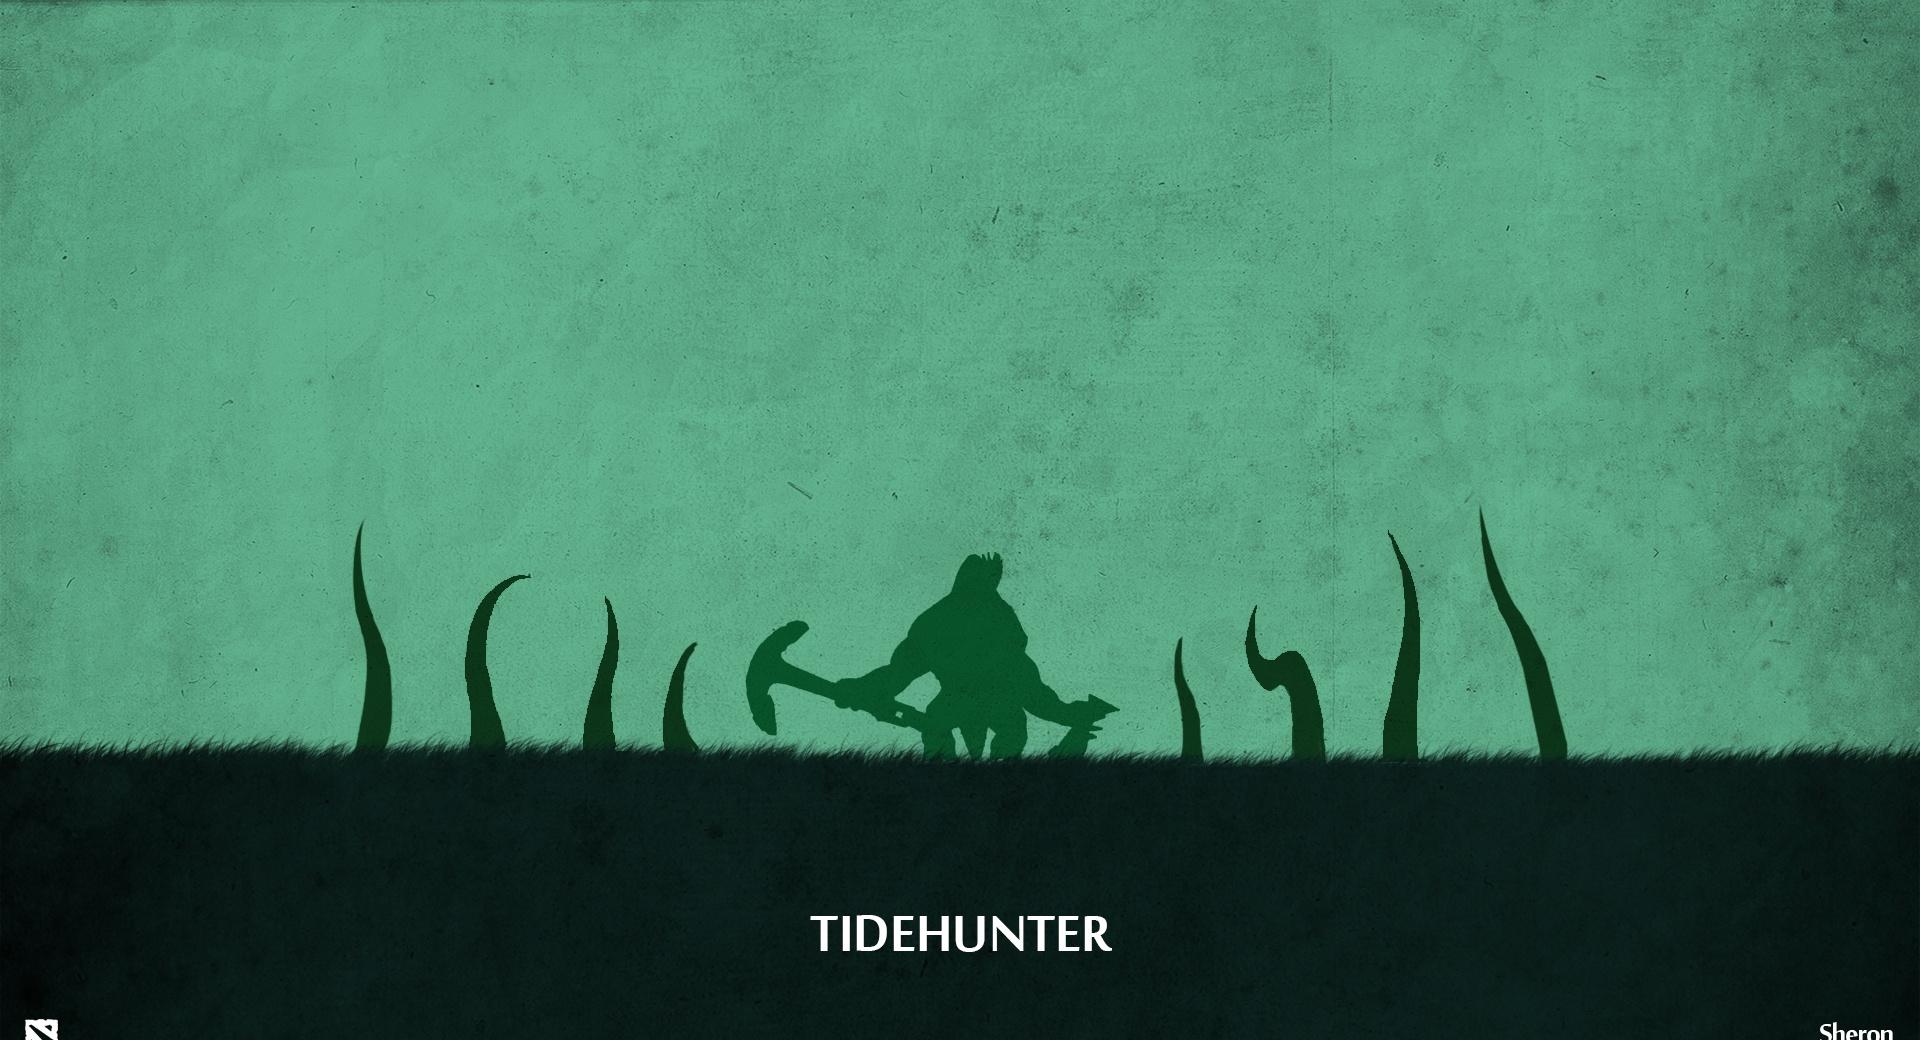 Tidehunter - DotA 2 at 320 x 480 iPhone size wallpapers HD quality